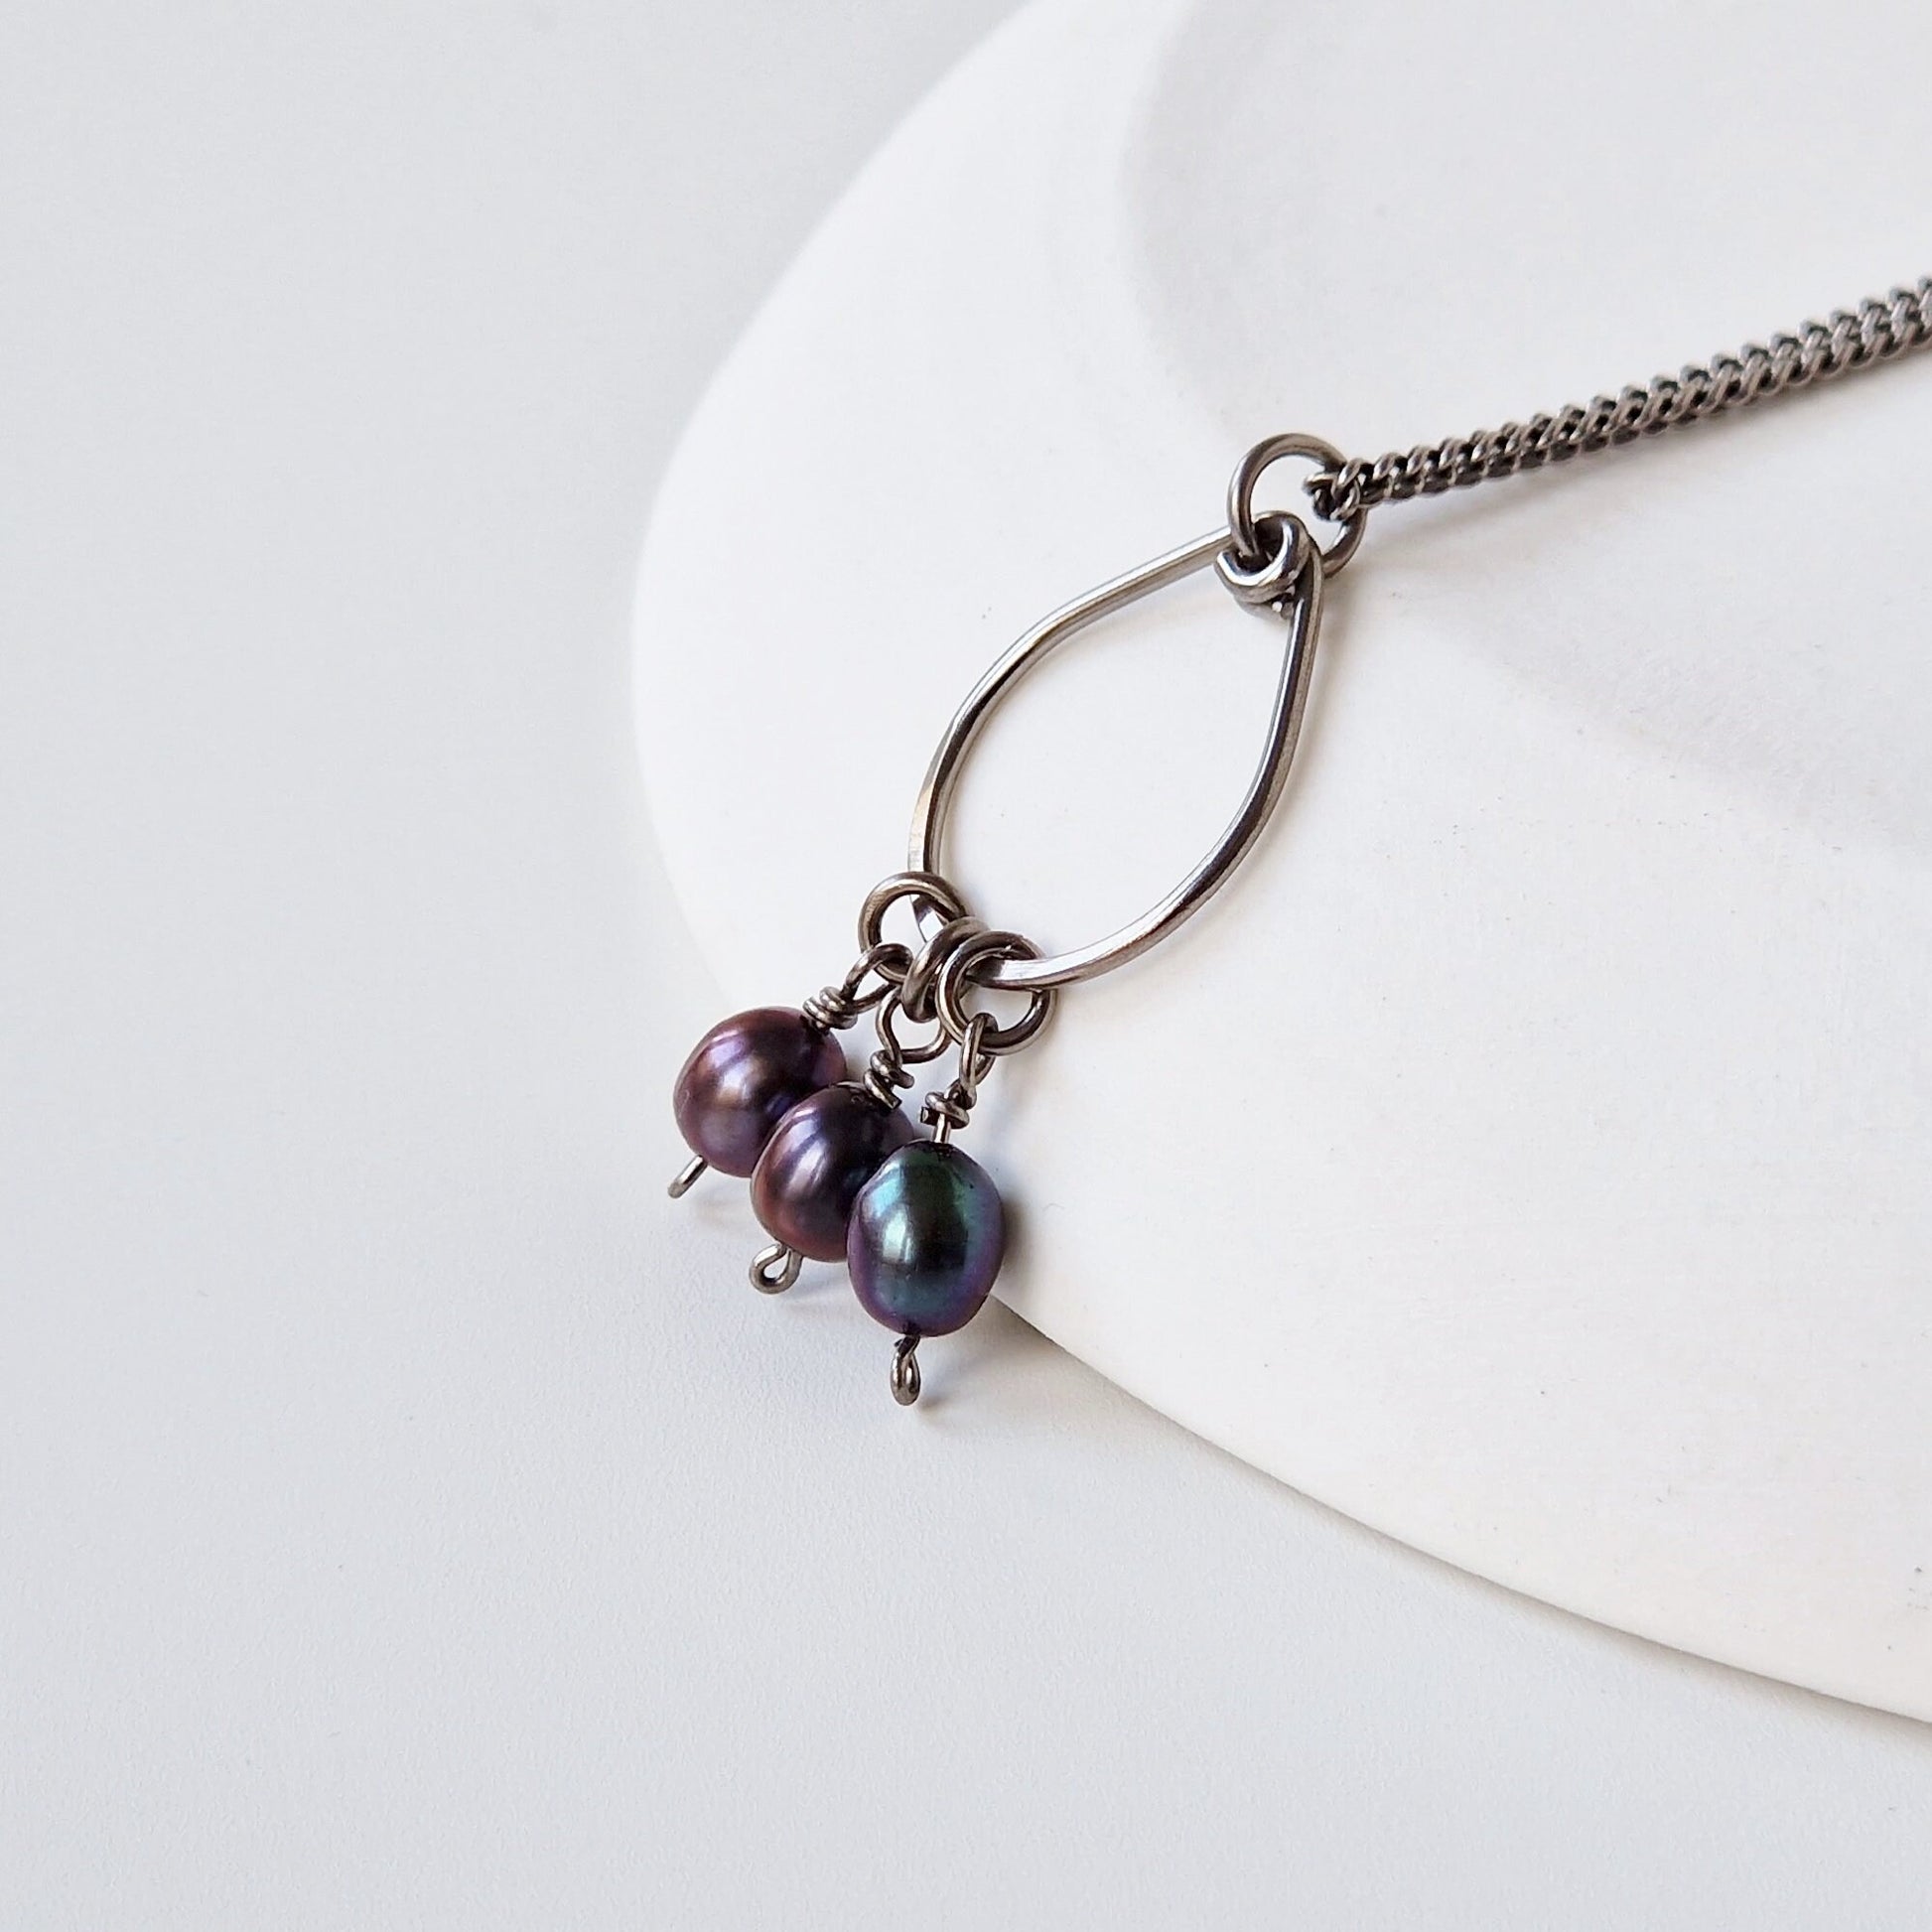 Titanium Teardrop Necklace with Black Pearls